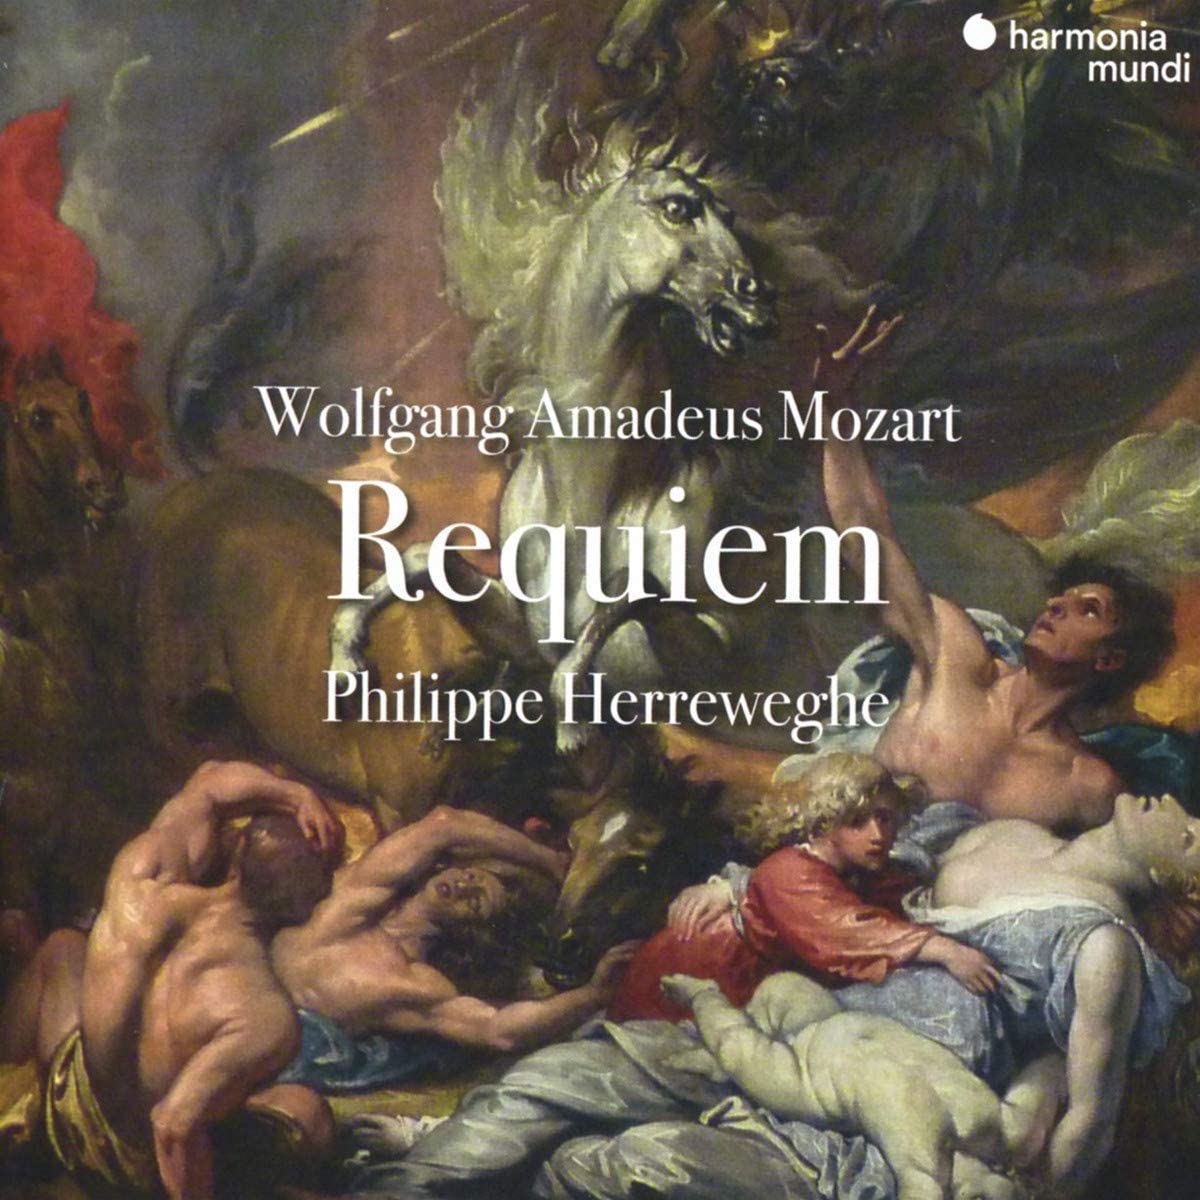 Wolfgang Amadeus Mozart: Requiem | Phillippe Herreweghe, Collegium Vocale Gent, Orchestre des Champs-Elysees